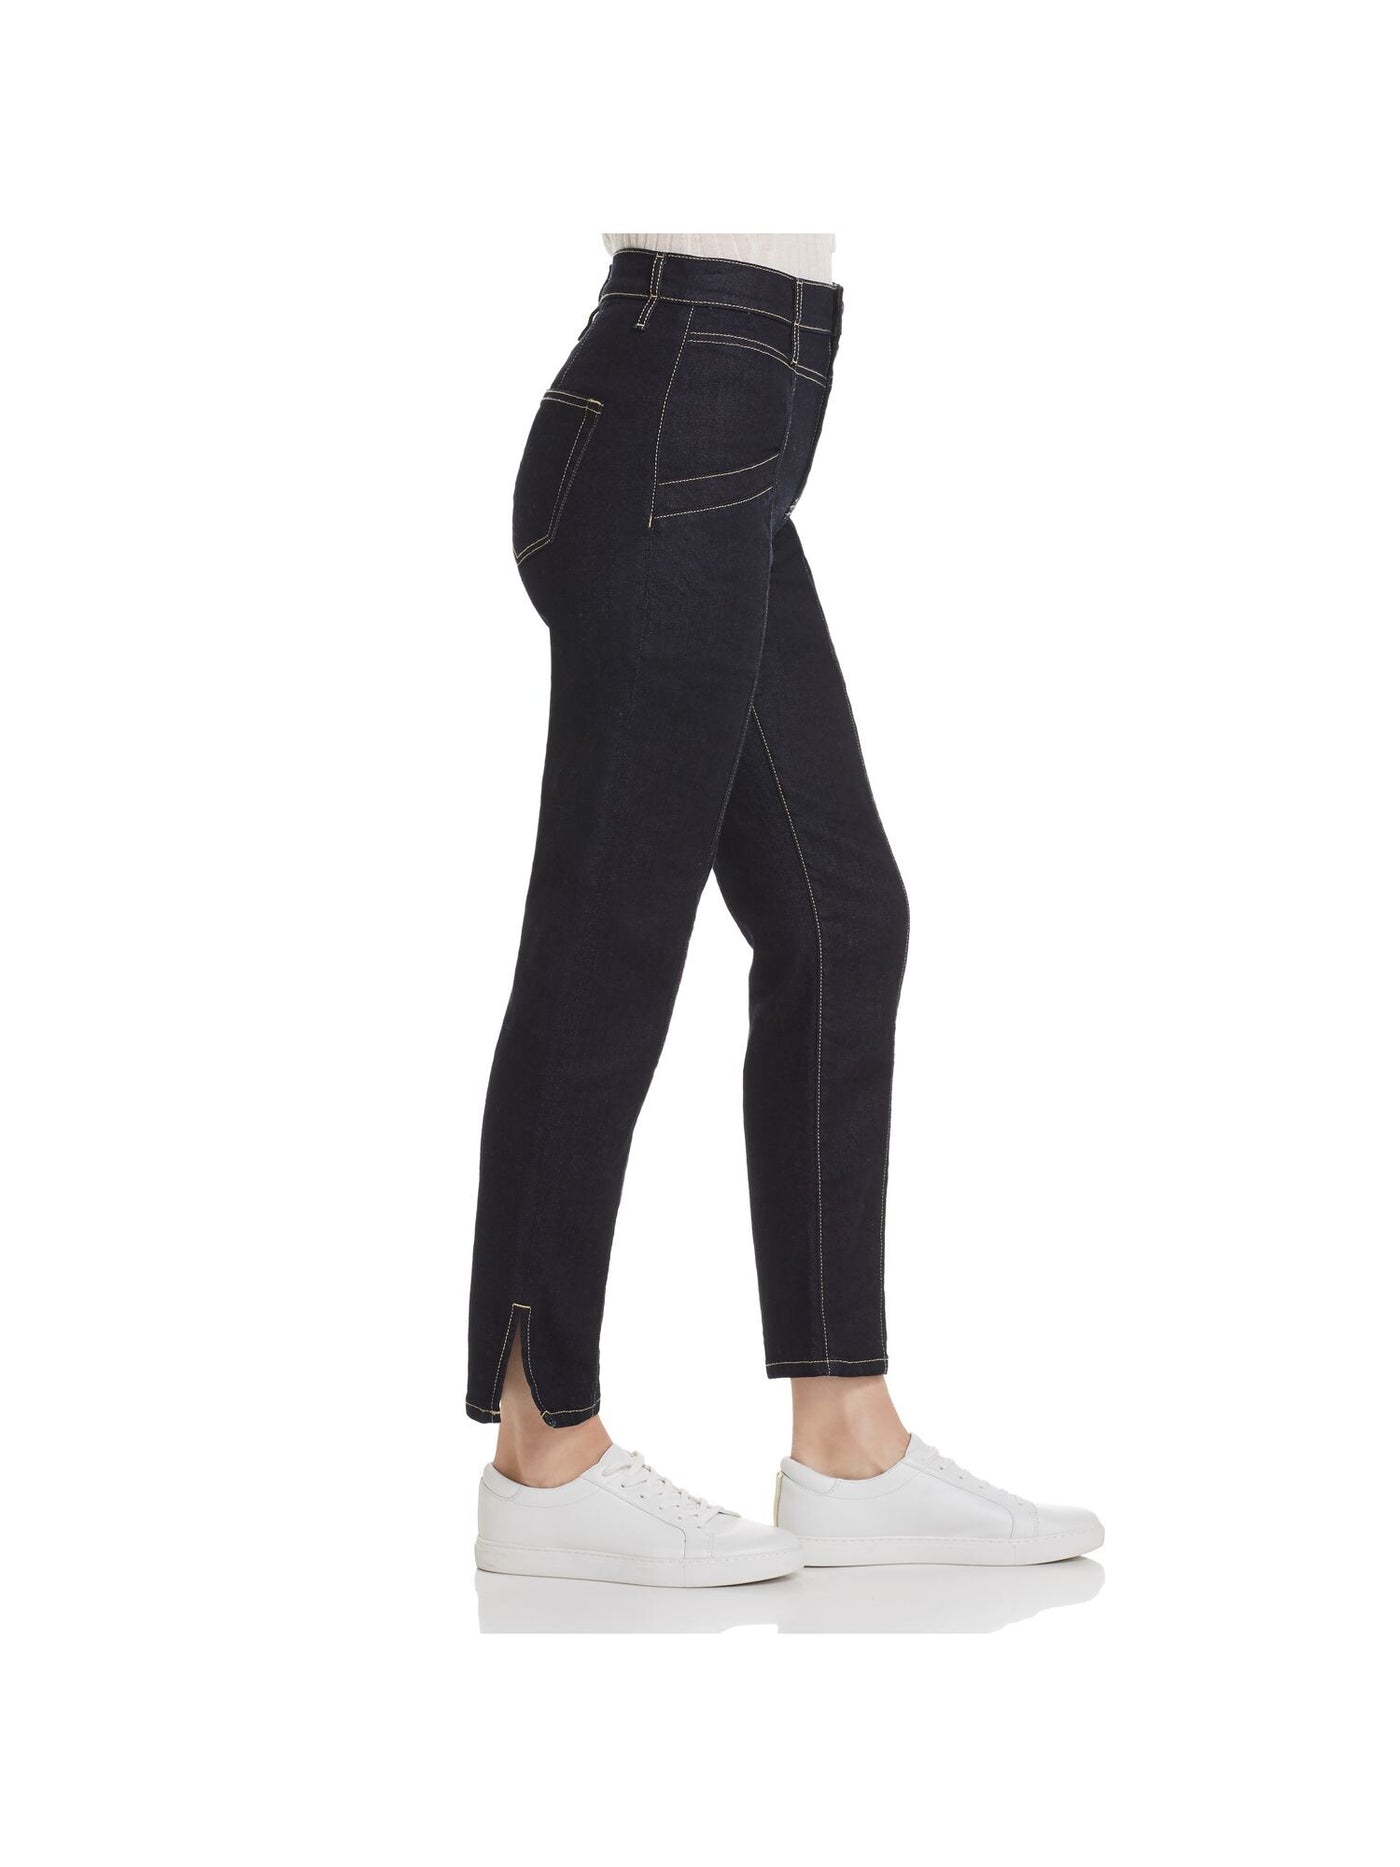 JOIE Womens Navy Straight leg Jeans Size: 24 Waist